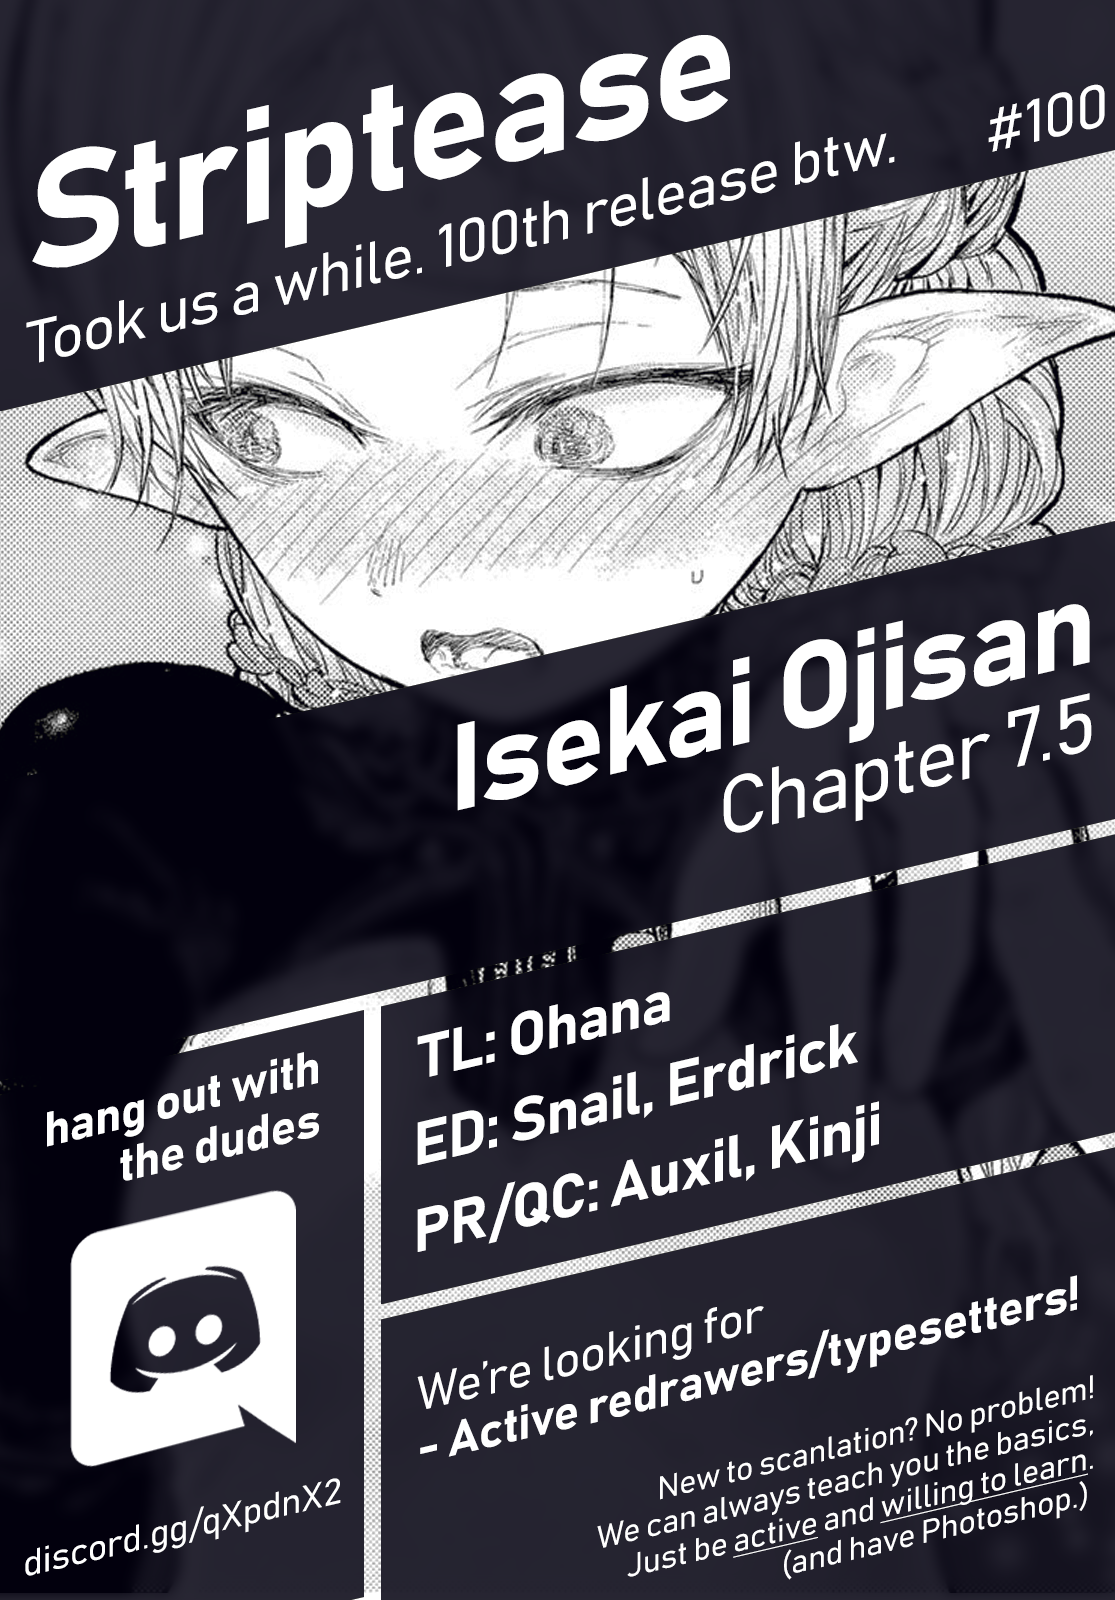 Isekai Ojisan Vol.1 Chapter 7.5 - Picture 1